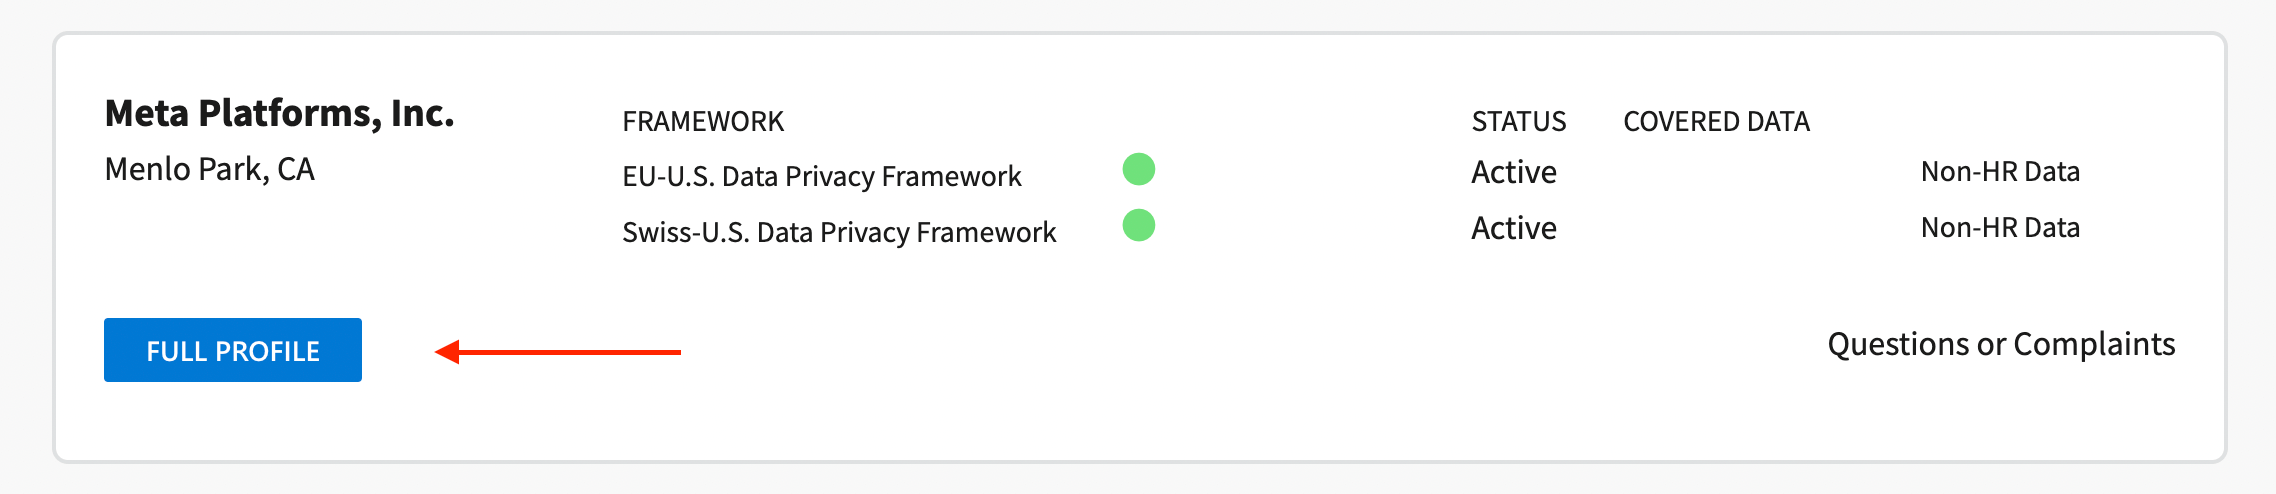 data privacy framework profile